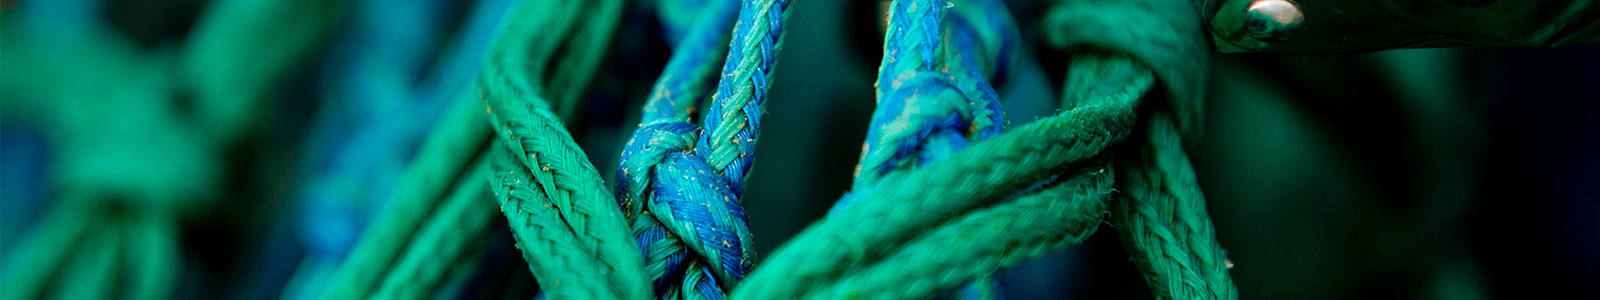 close up image of fishing nets